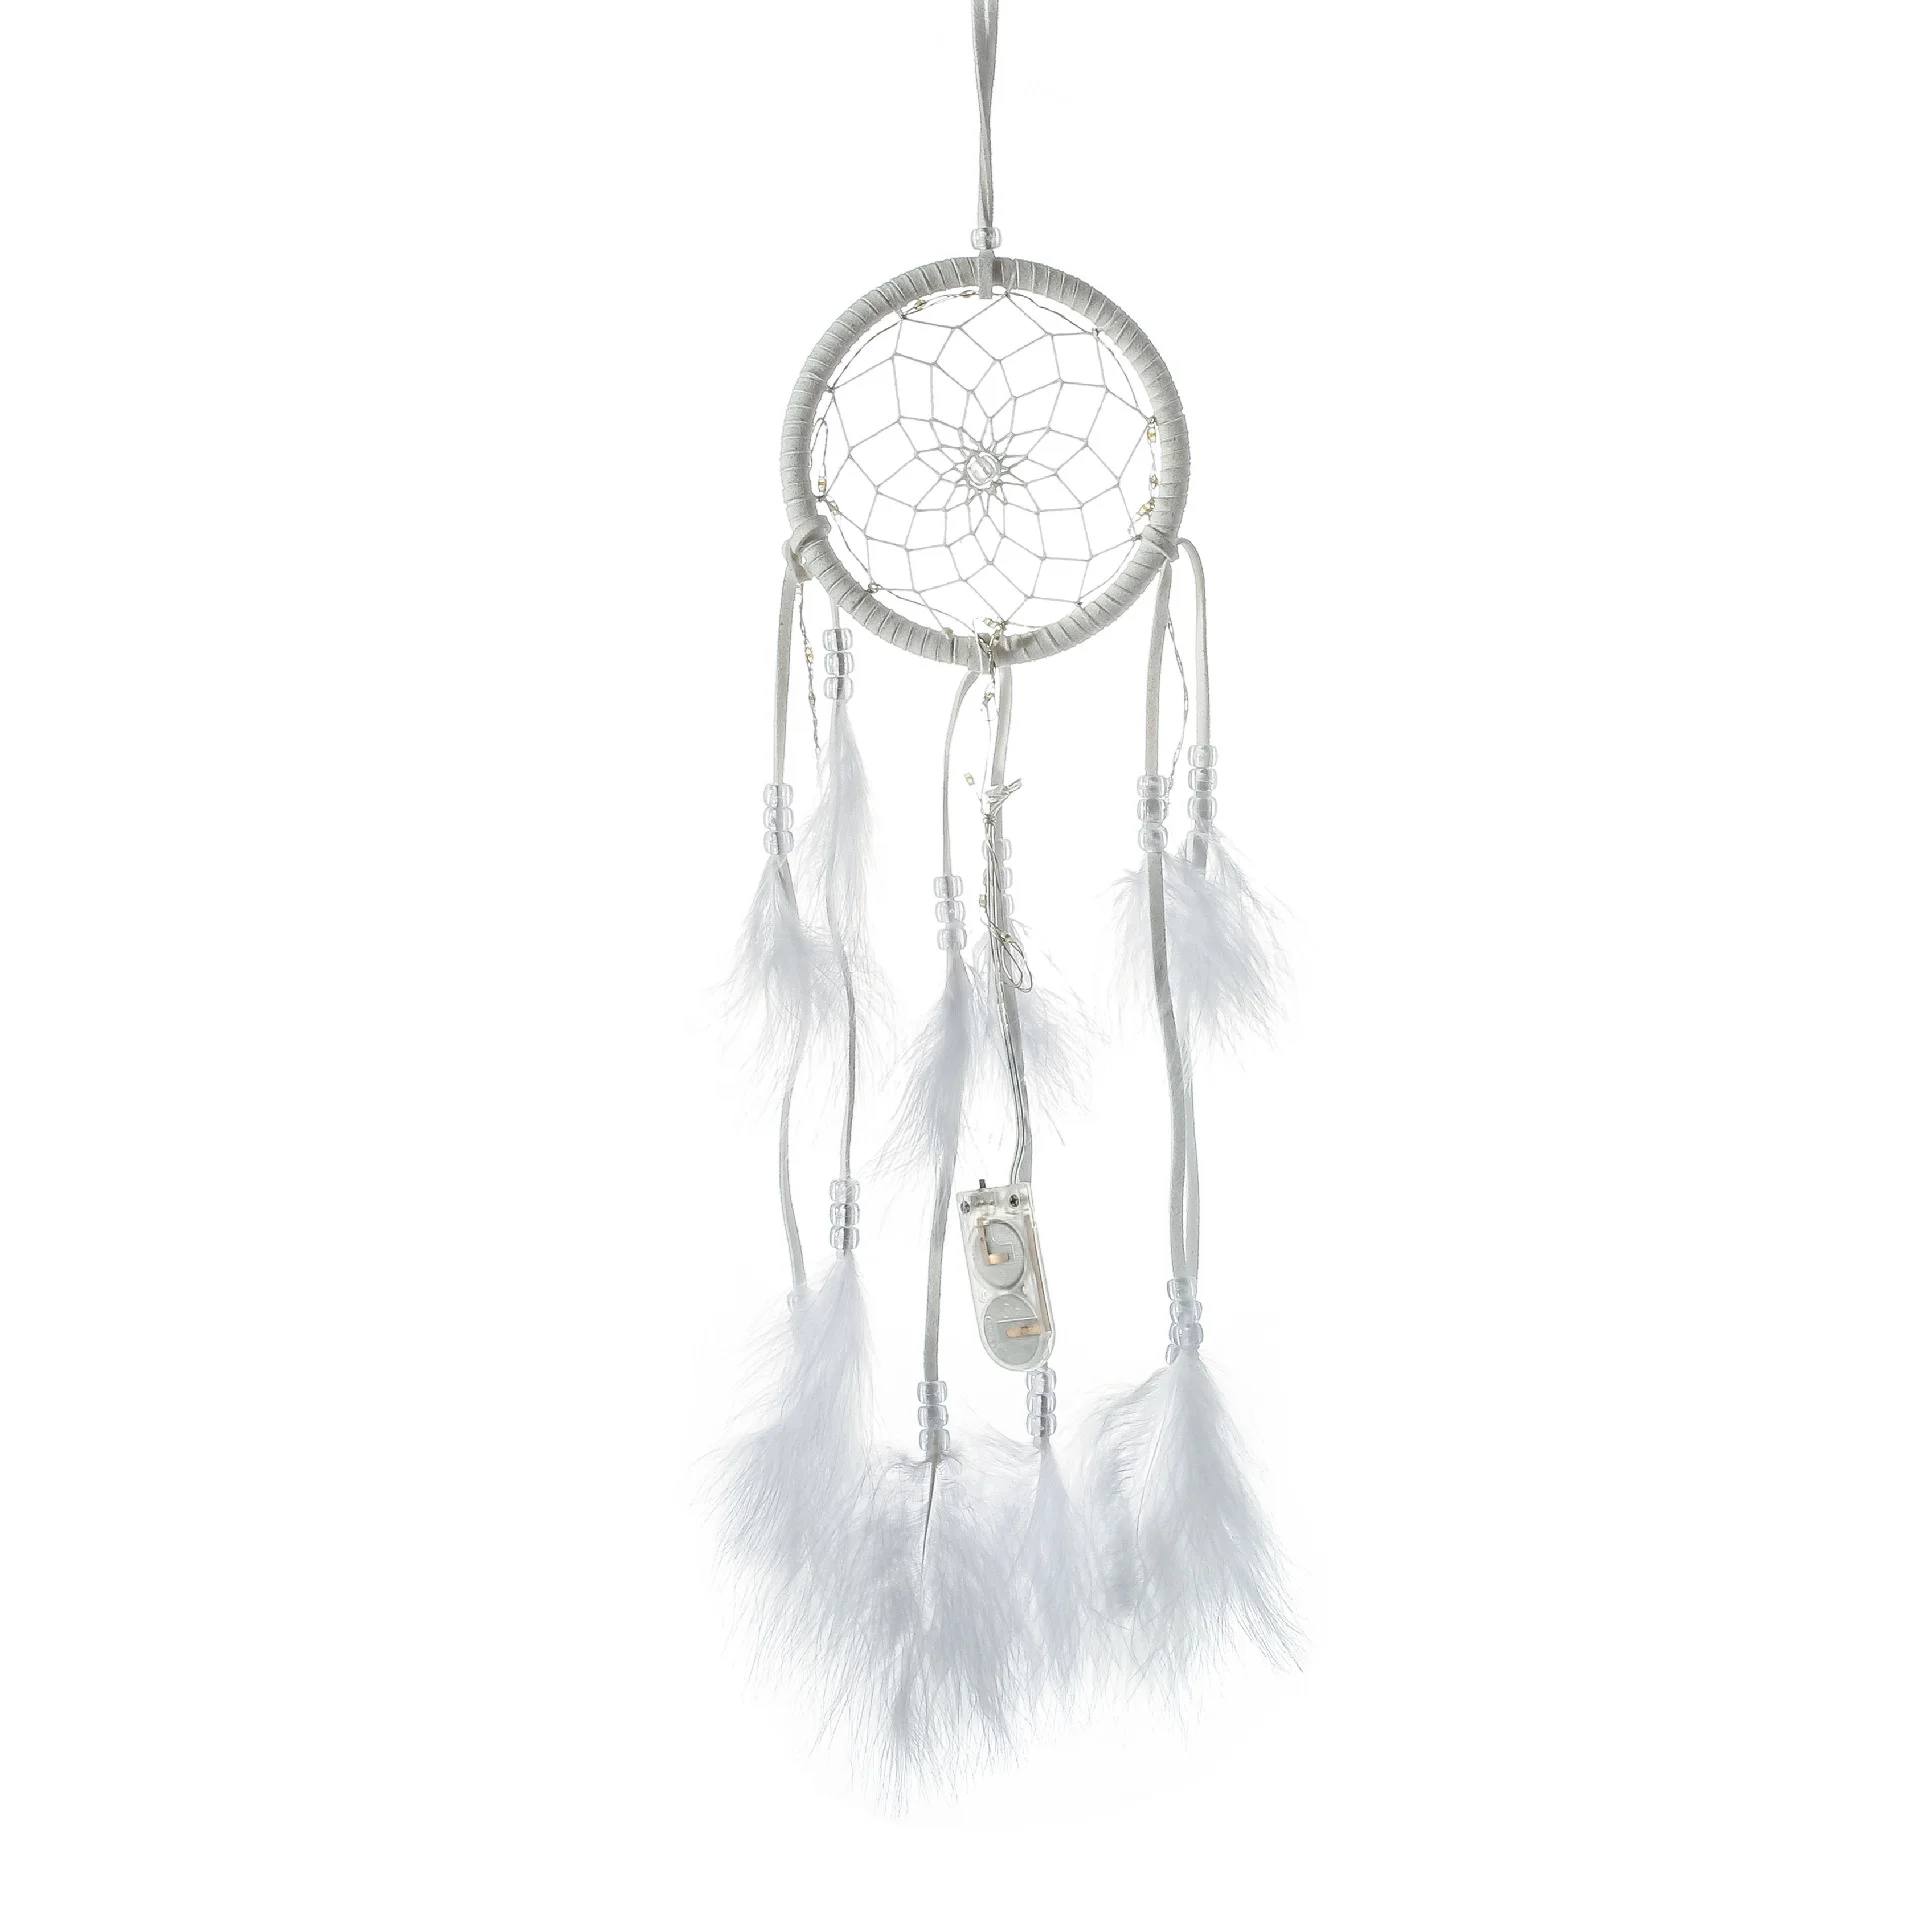 

Creative Star LED Light Fashion Gift India Handmade Wind Chimes Hanging Pendant Dream Catcher Home Art Decor, White